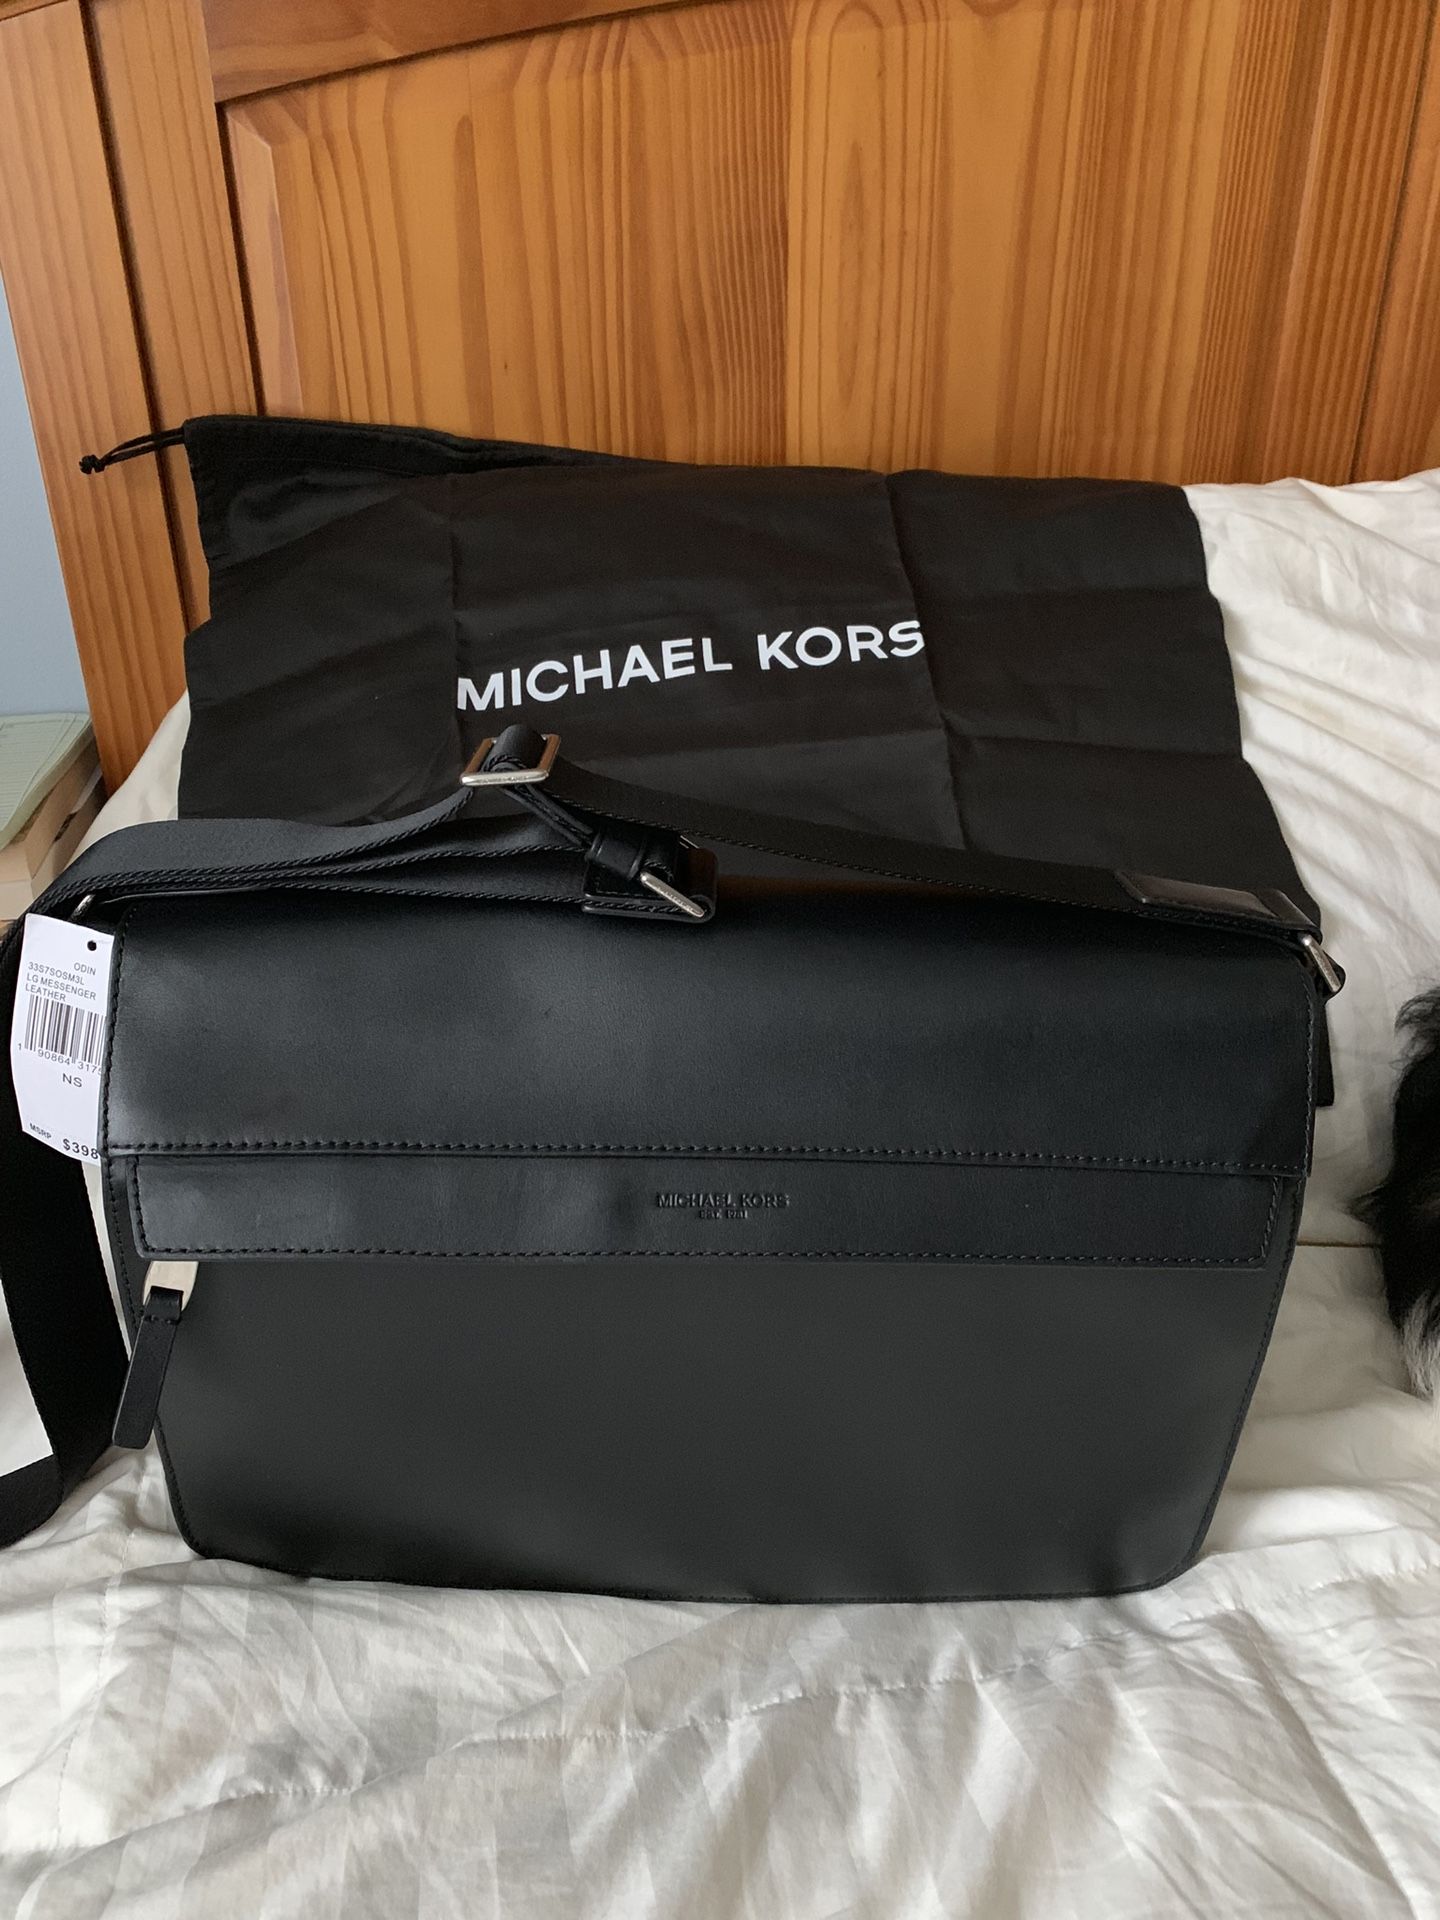 Michael Kors messenger bag